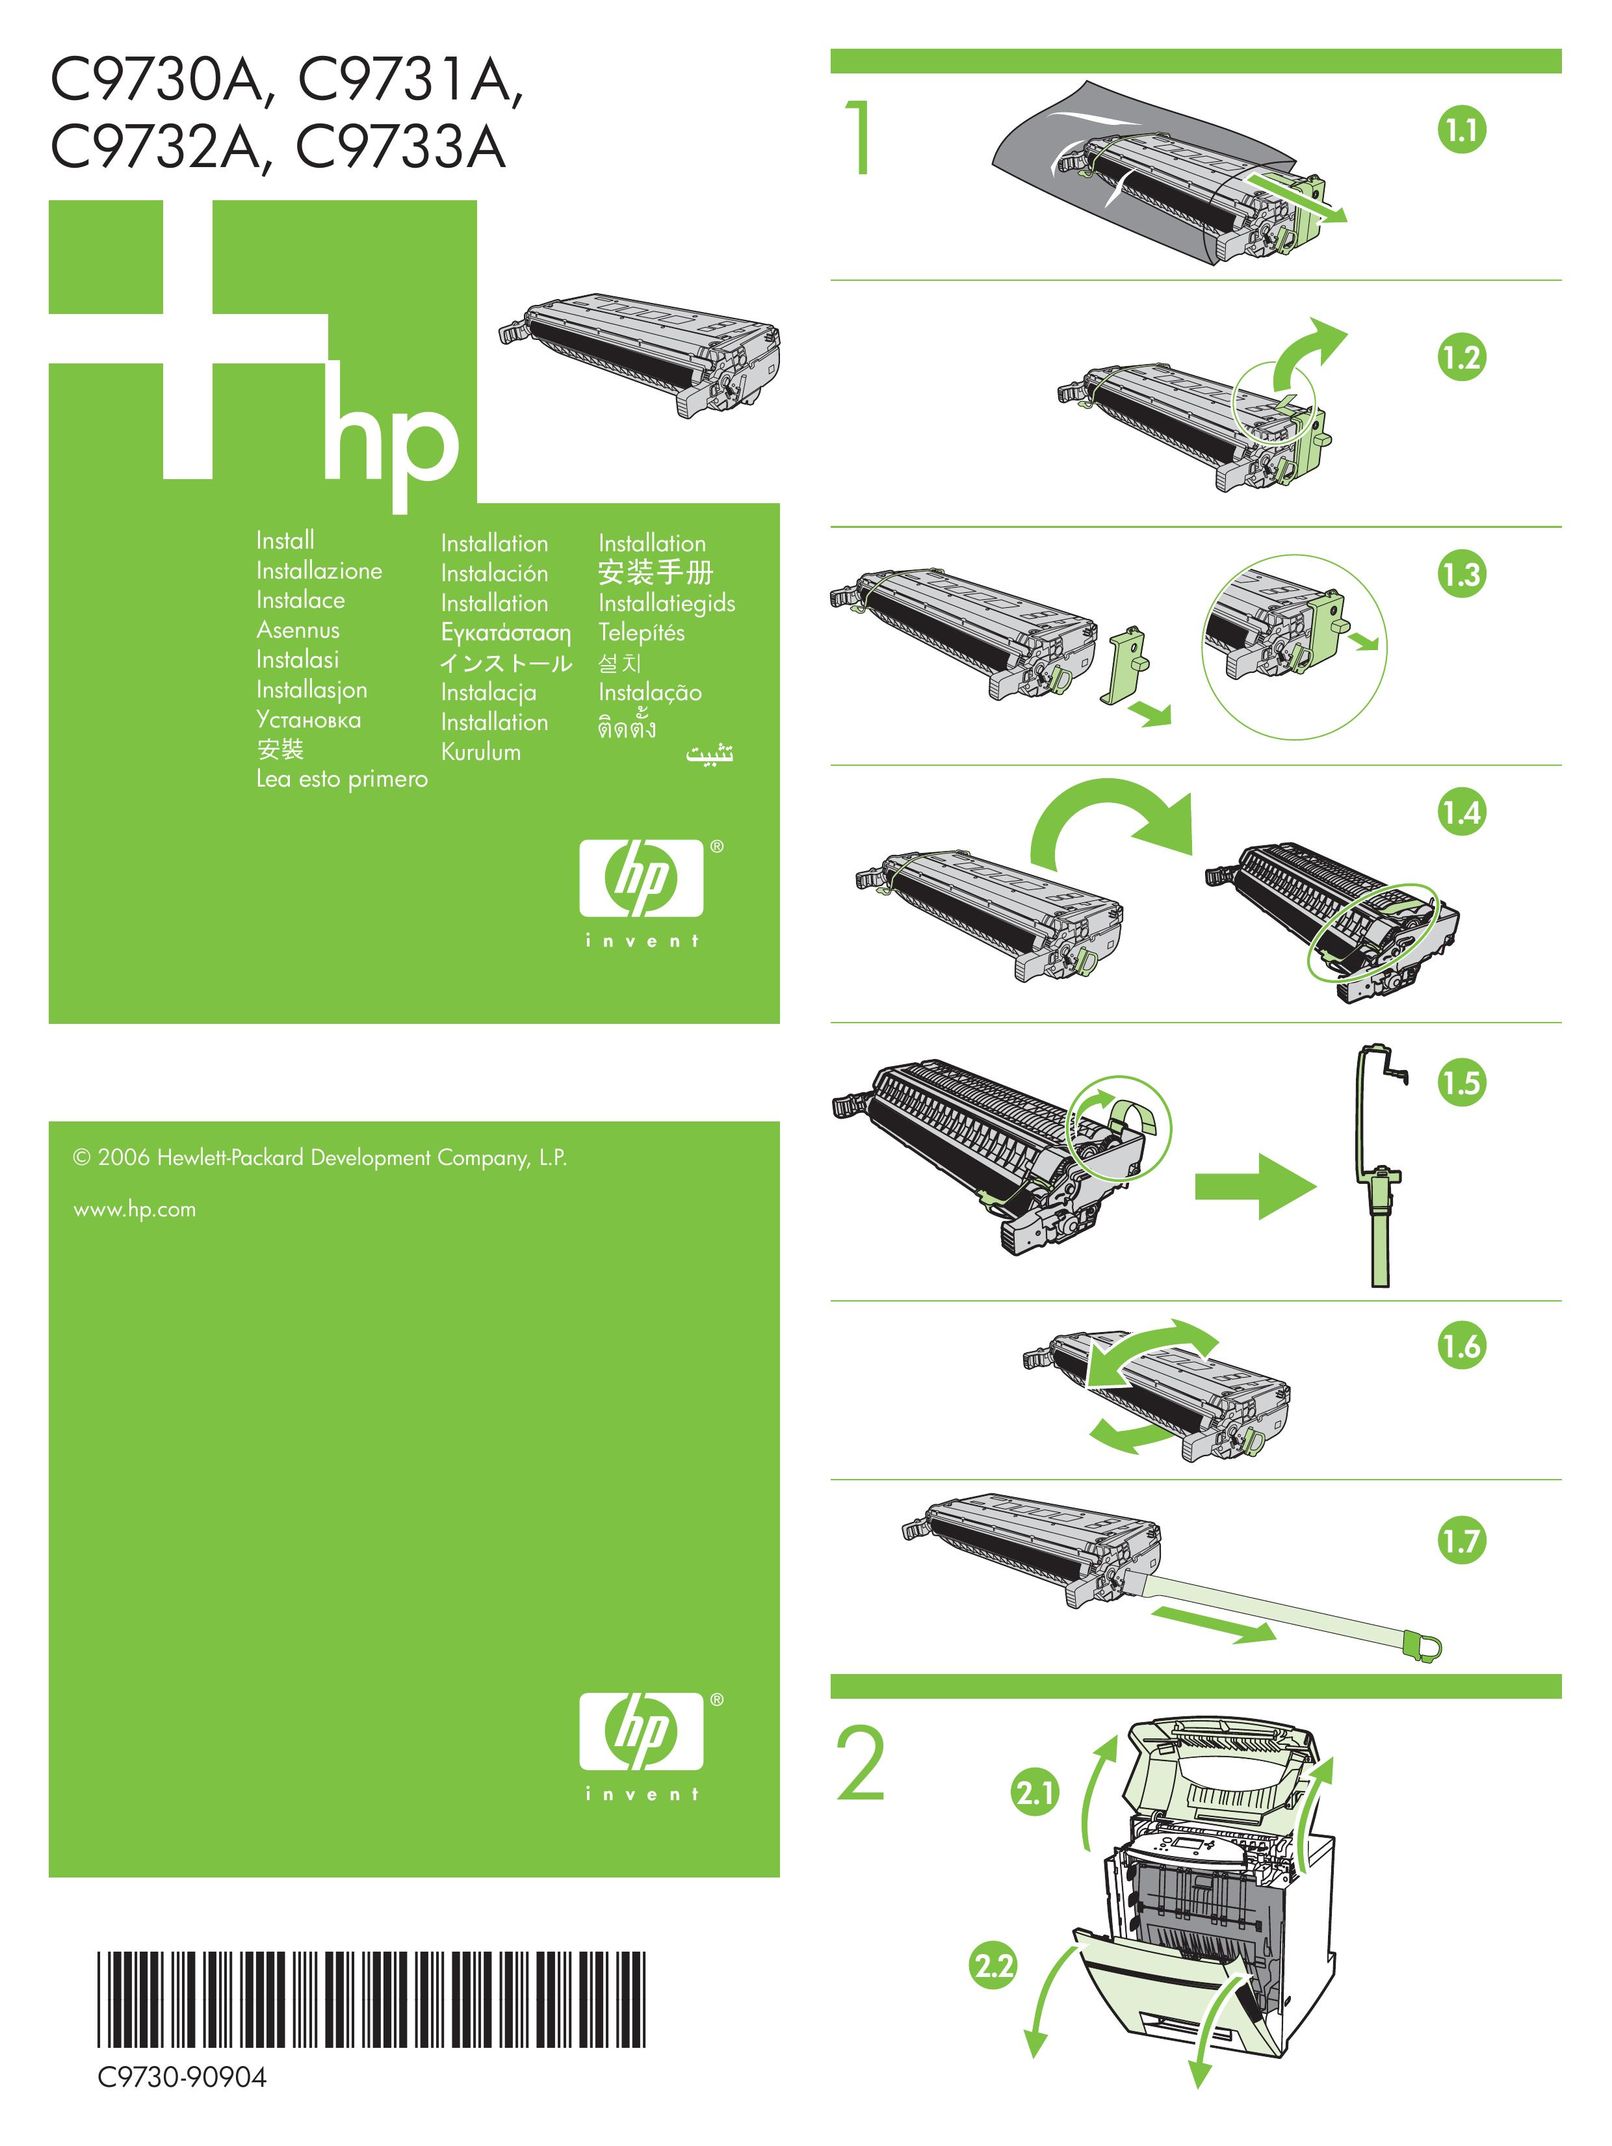 HP (Hewlett-Packard) C9732A Printer Accessories User Manual